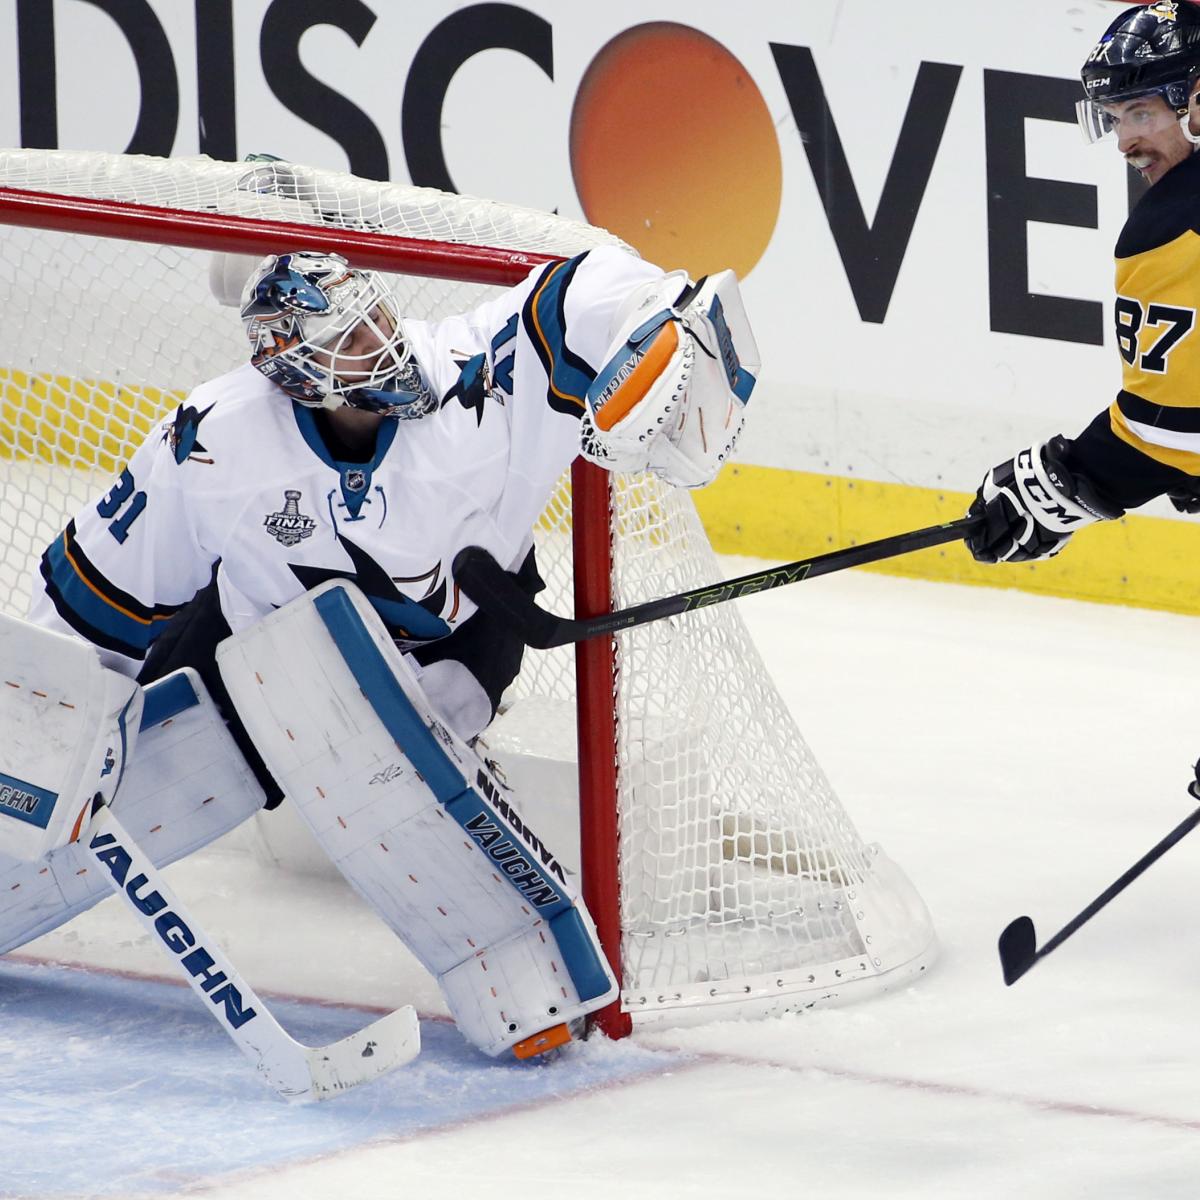 Penguins vs. Sharks Game 6 Live Stream, NBC TV Schedule, Odds